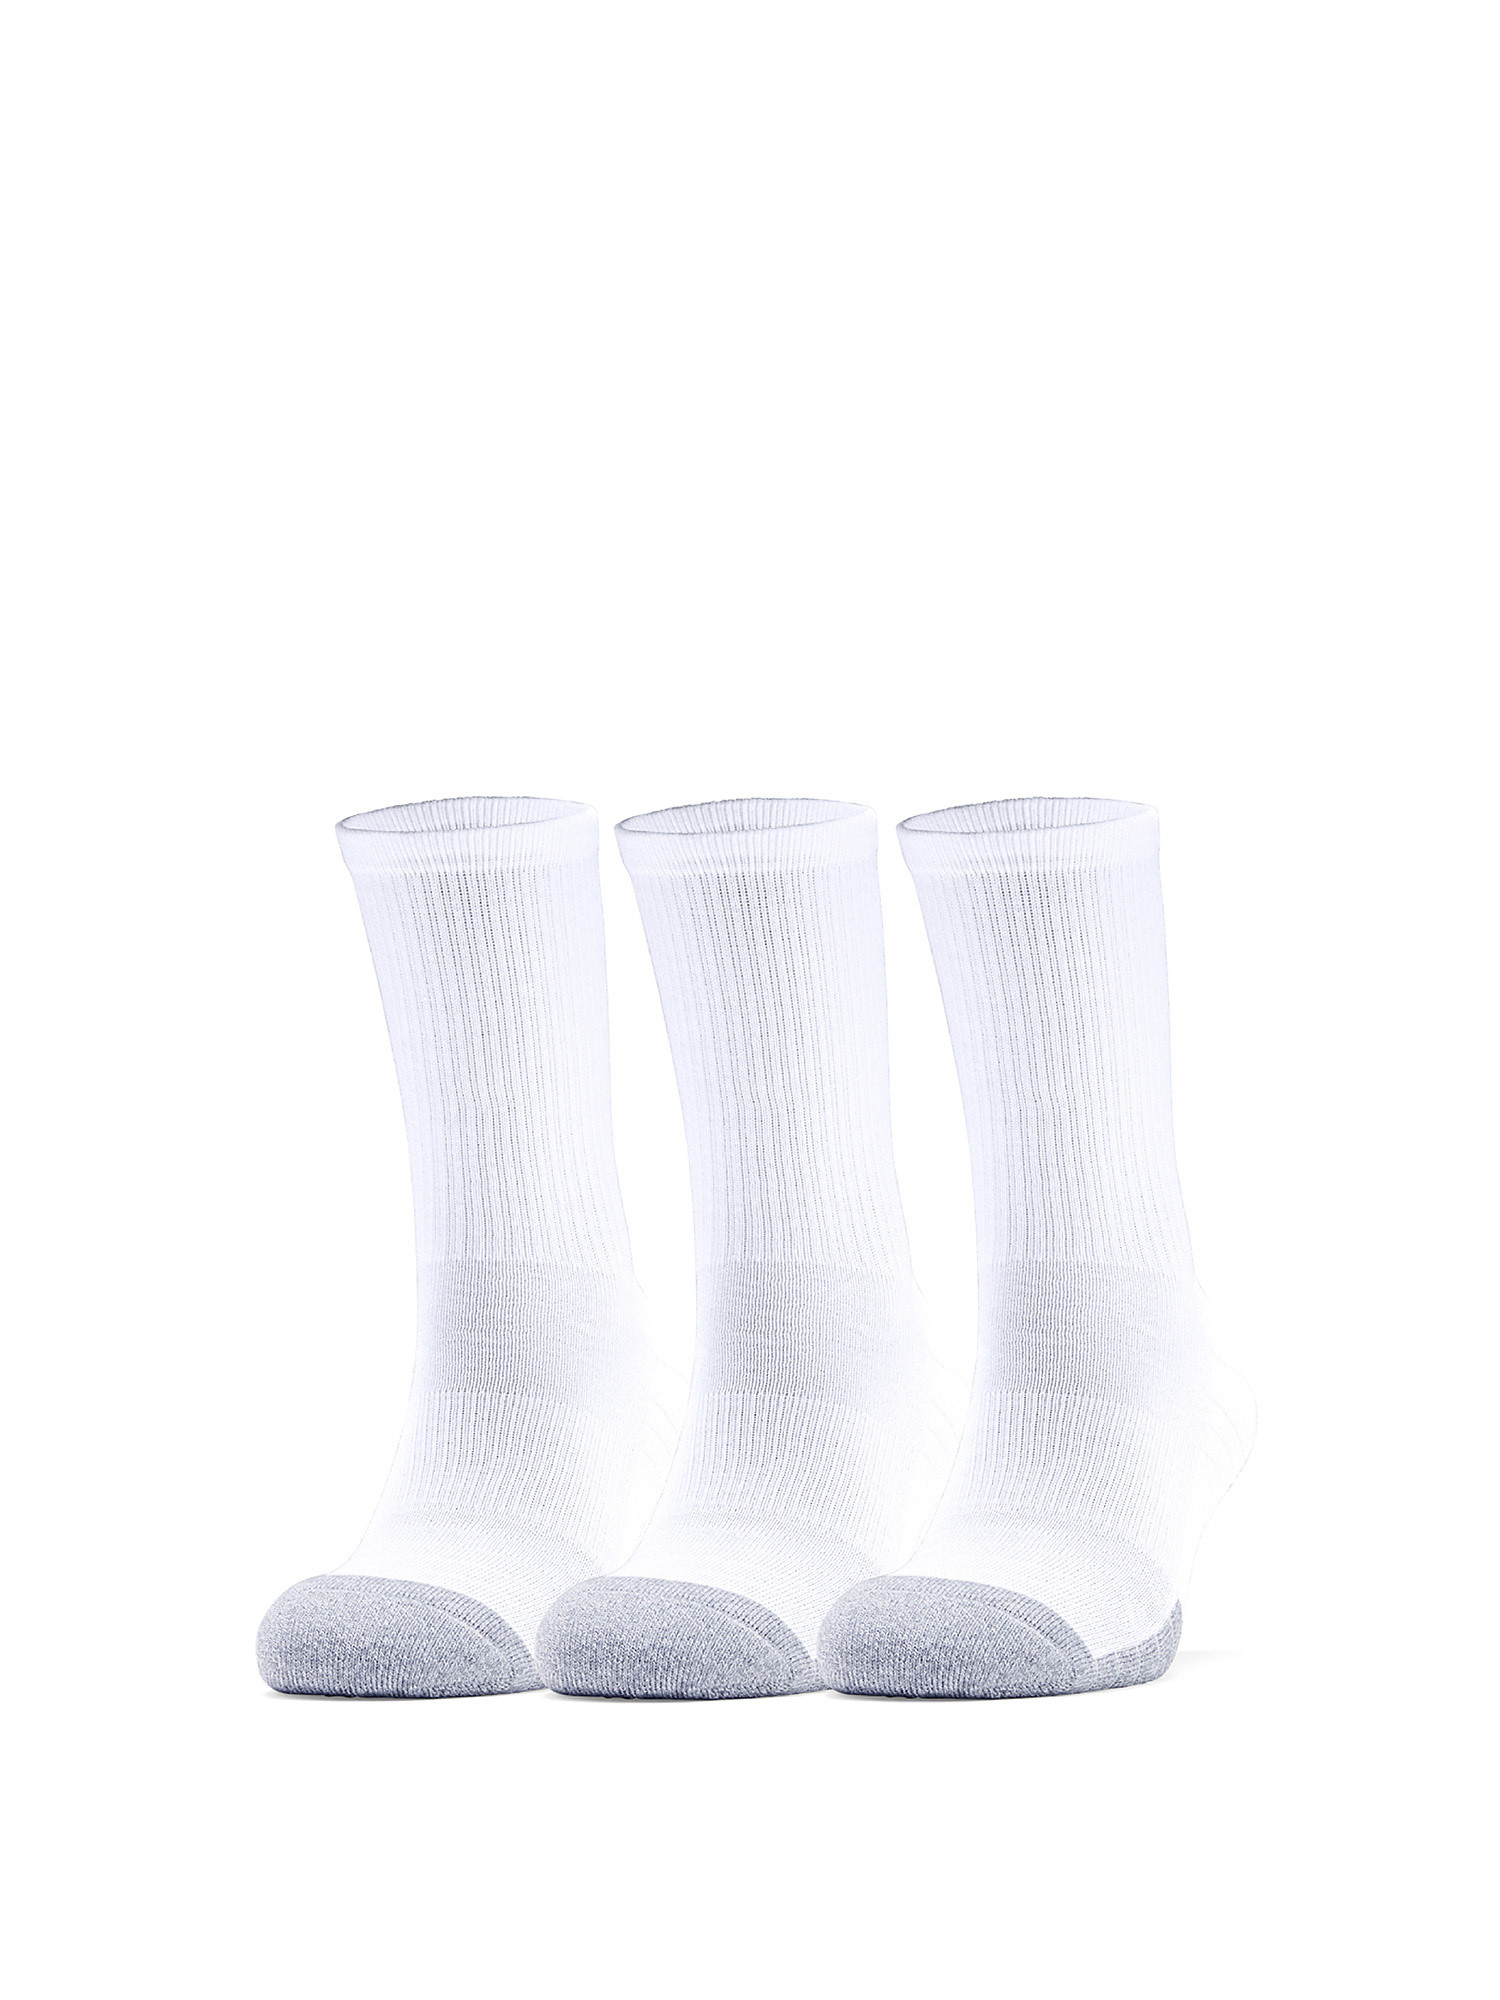 Under Armour - HeatGear® Crew socks, White, large image number 3